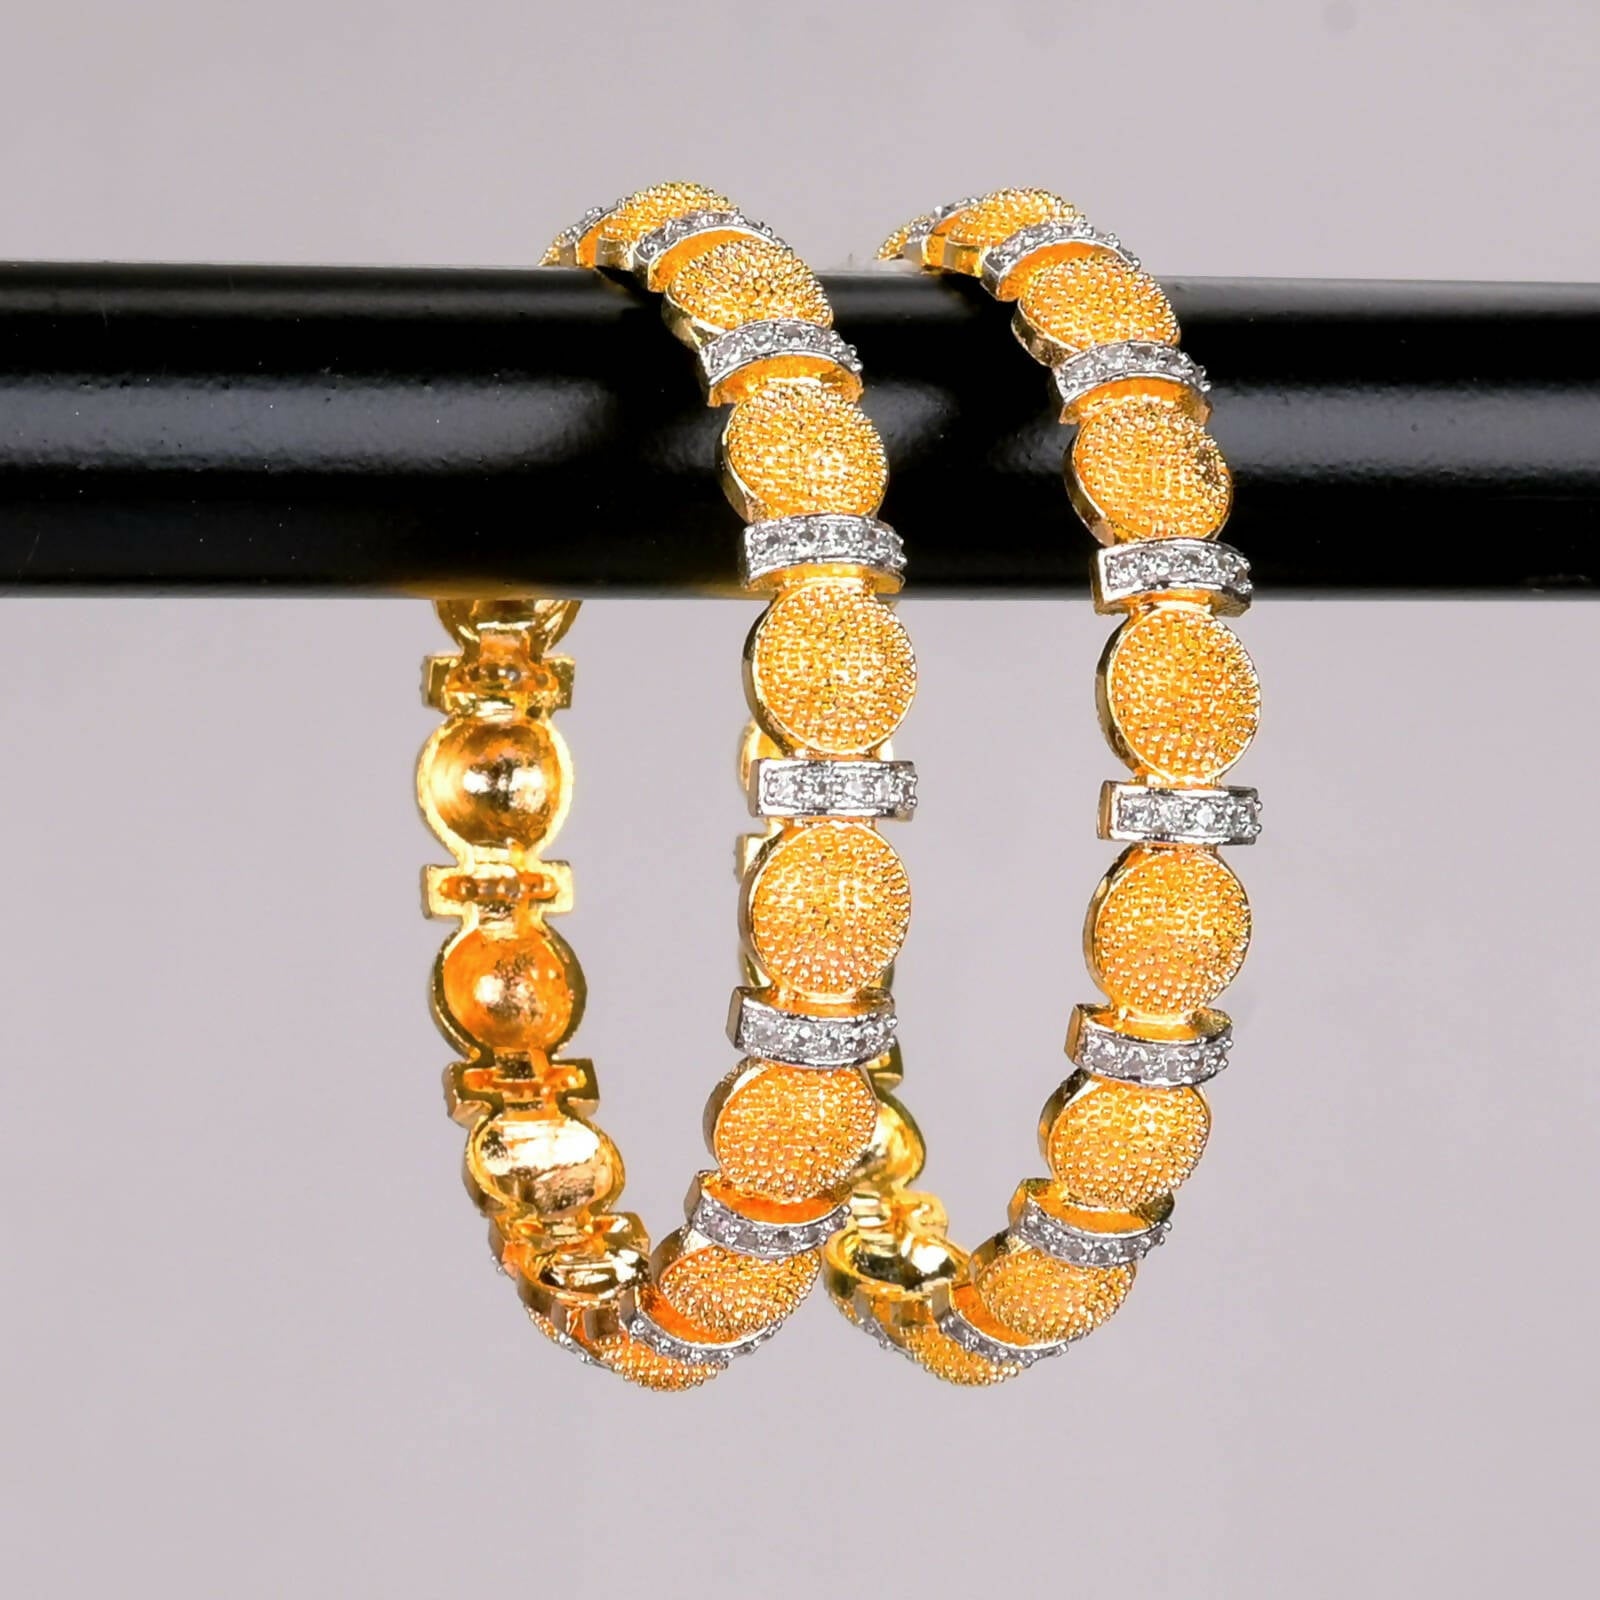 Golden motif bangles